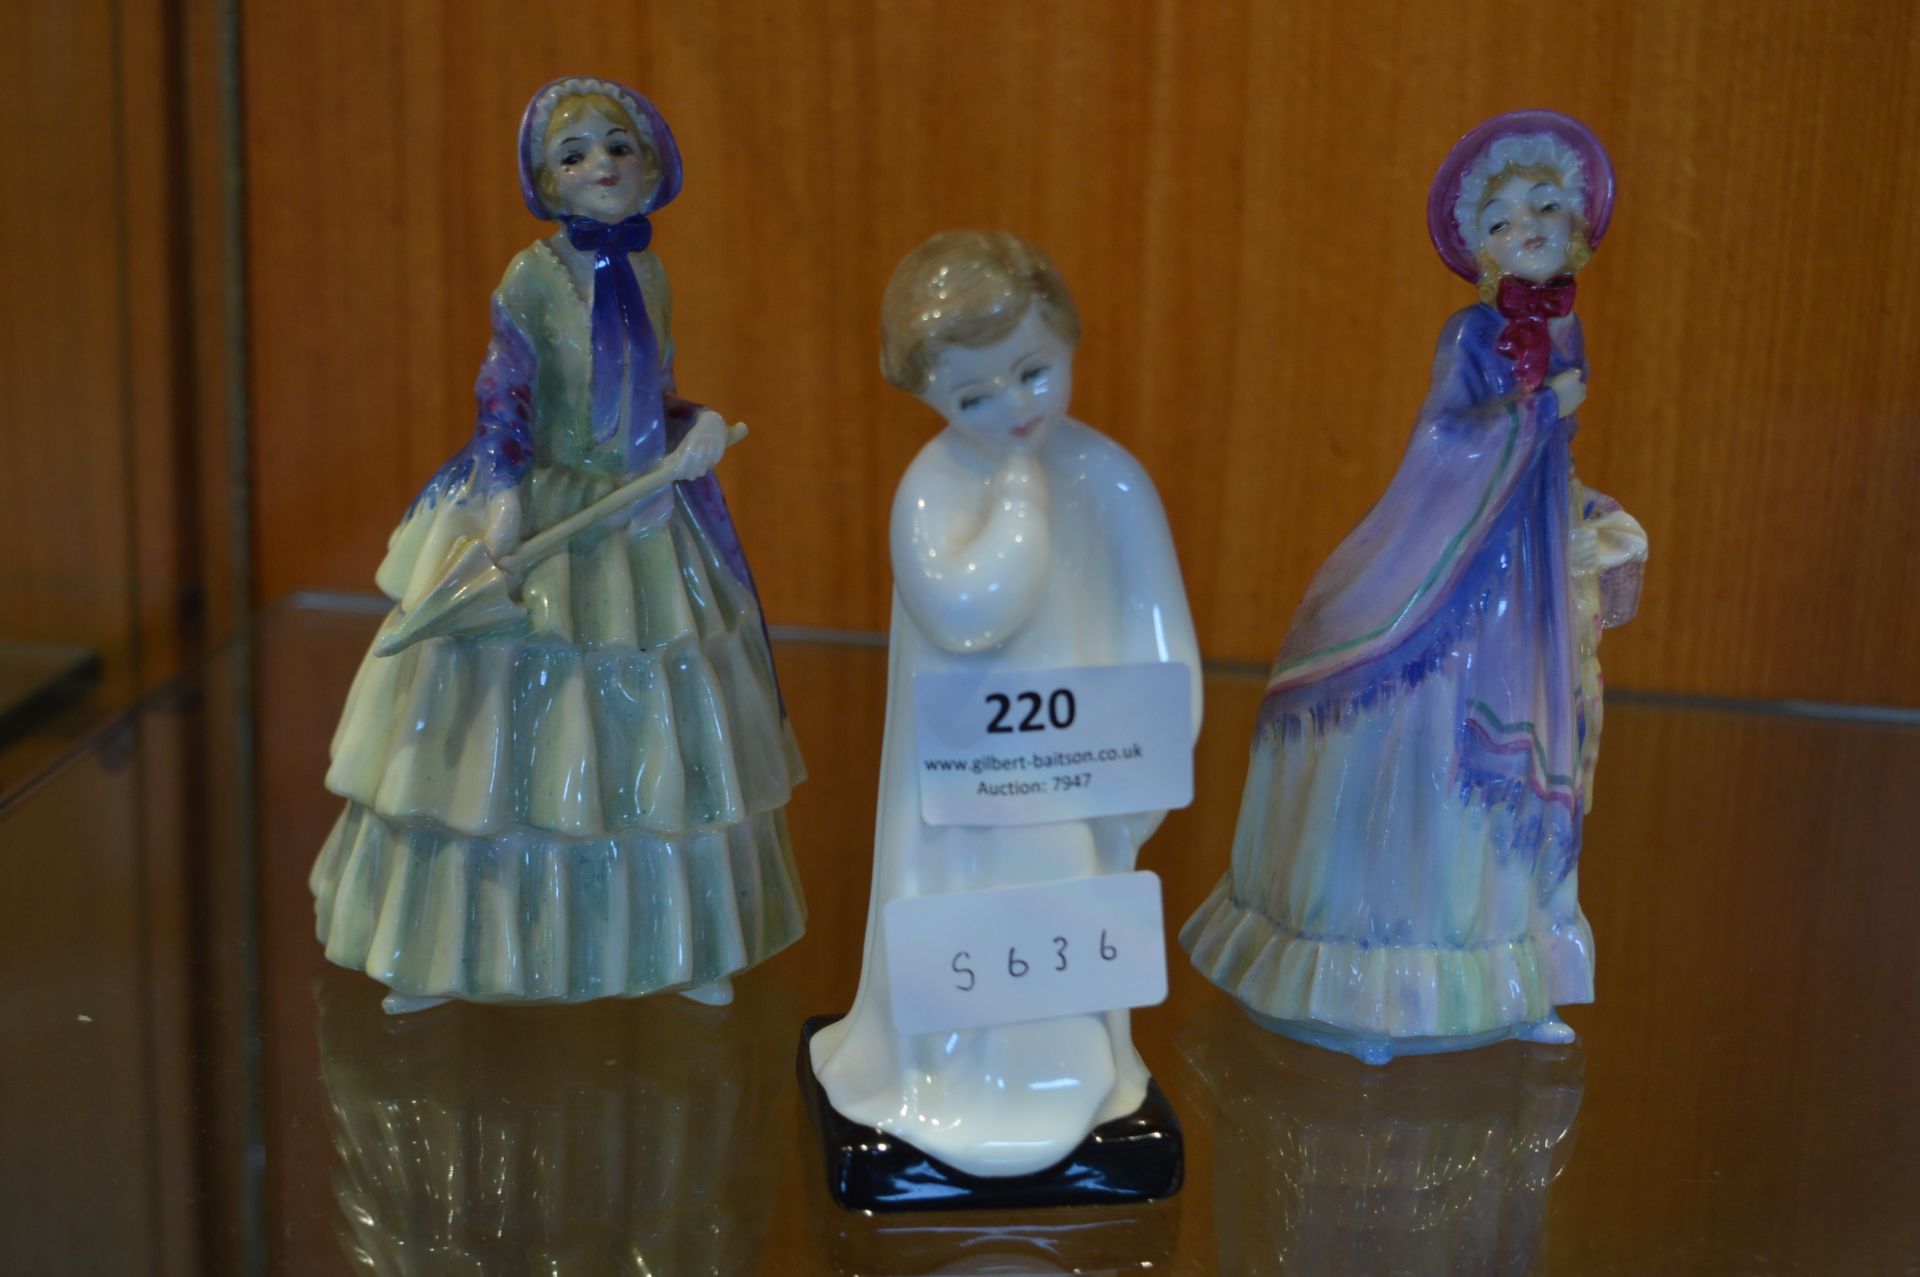 Three Royal Doulton Figurines - Biddy, Little Mist